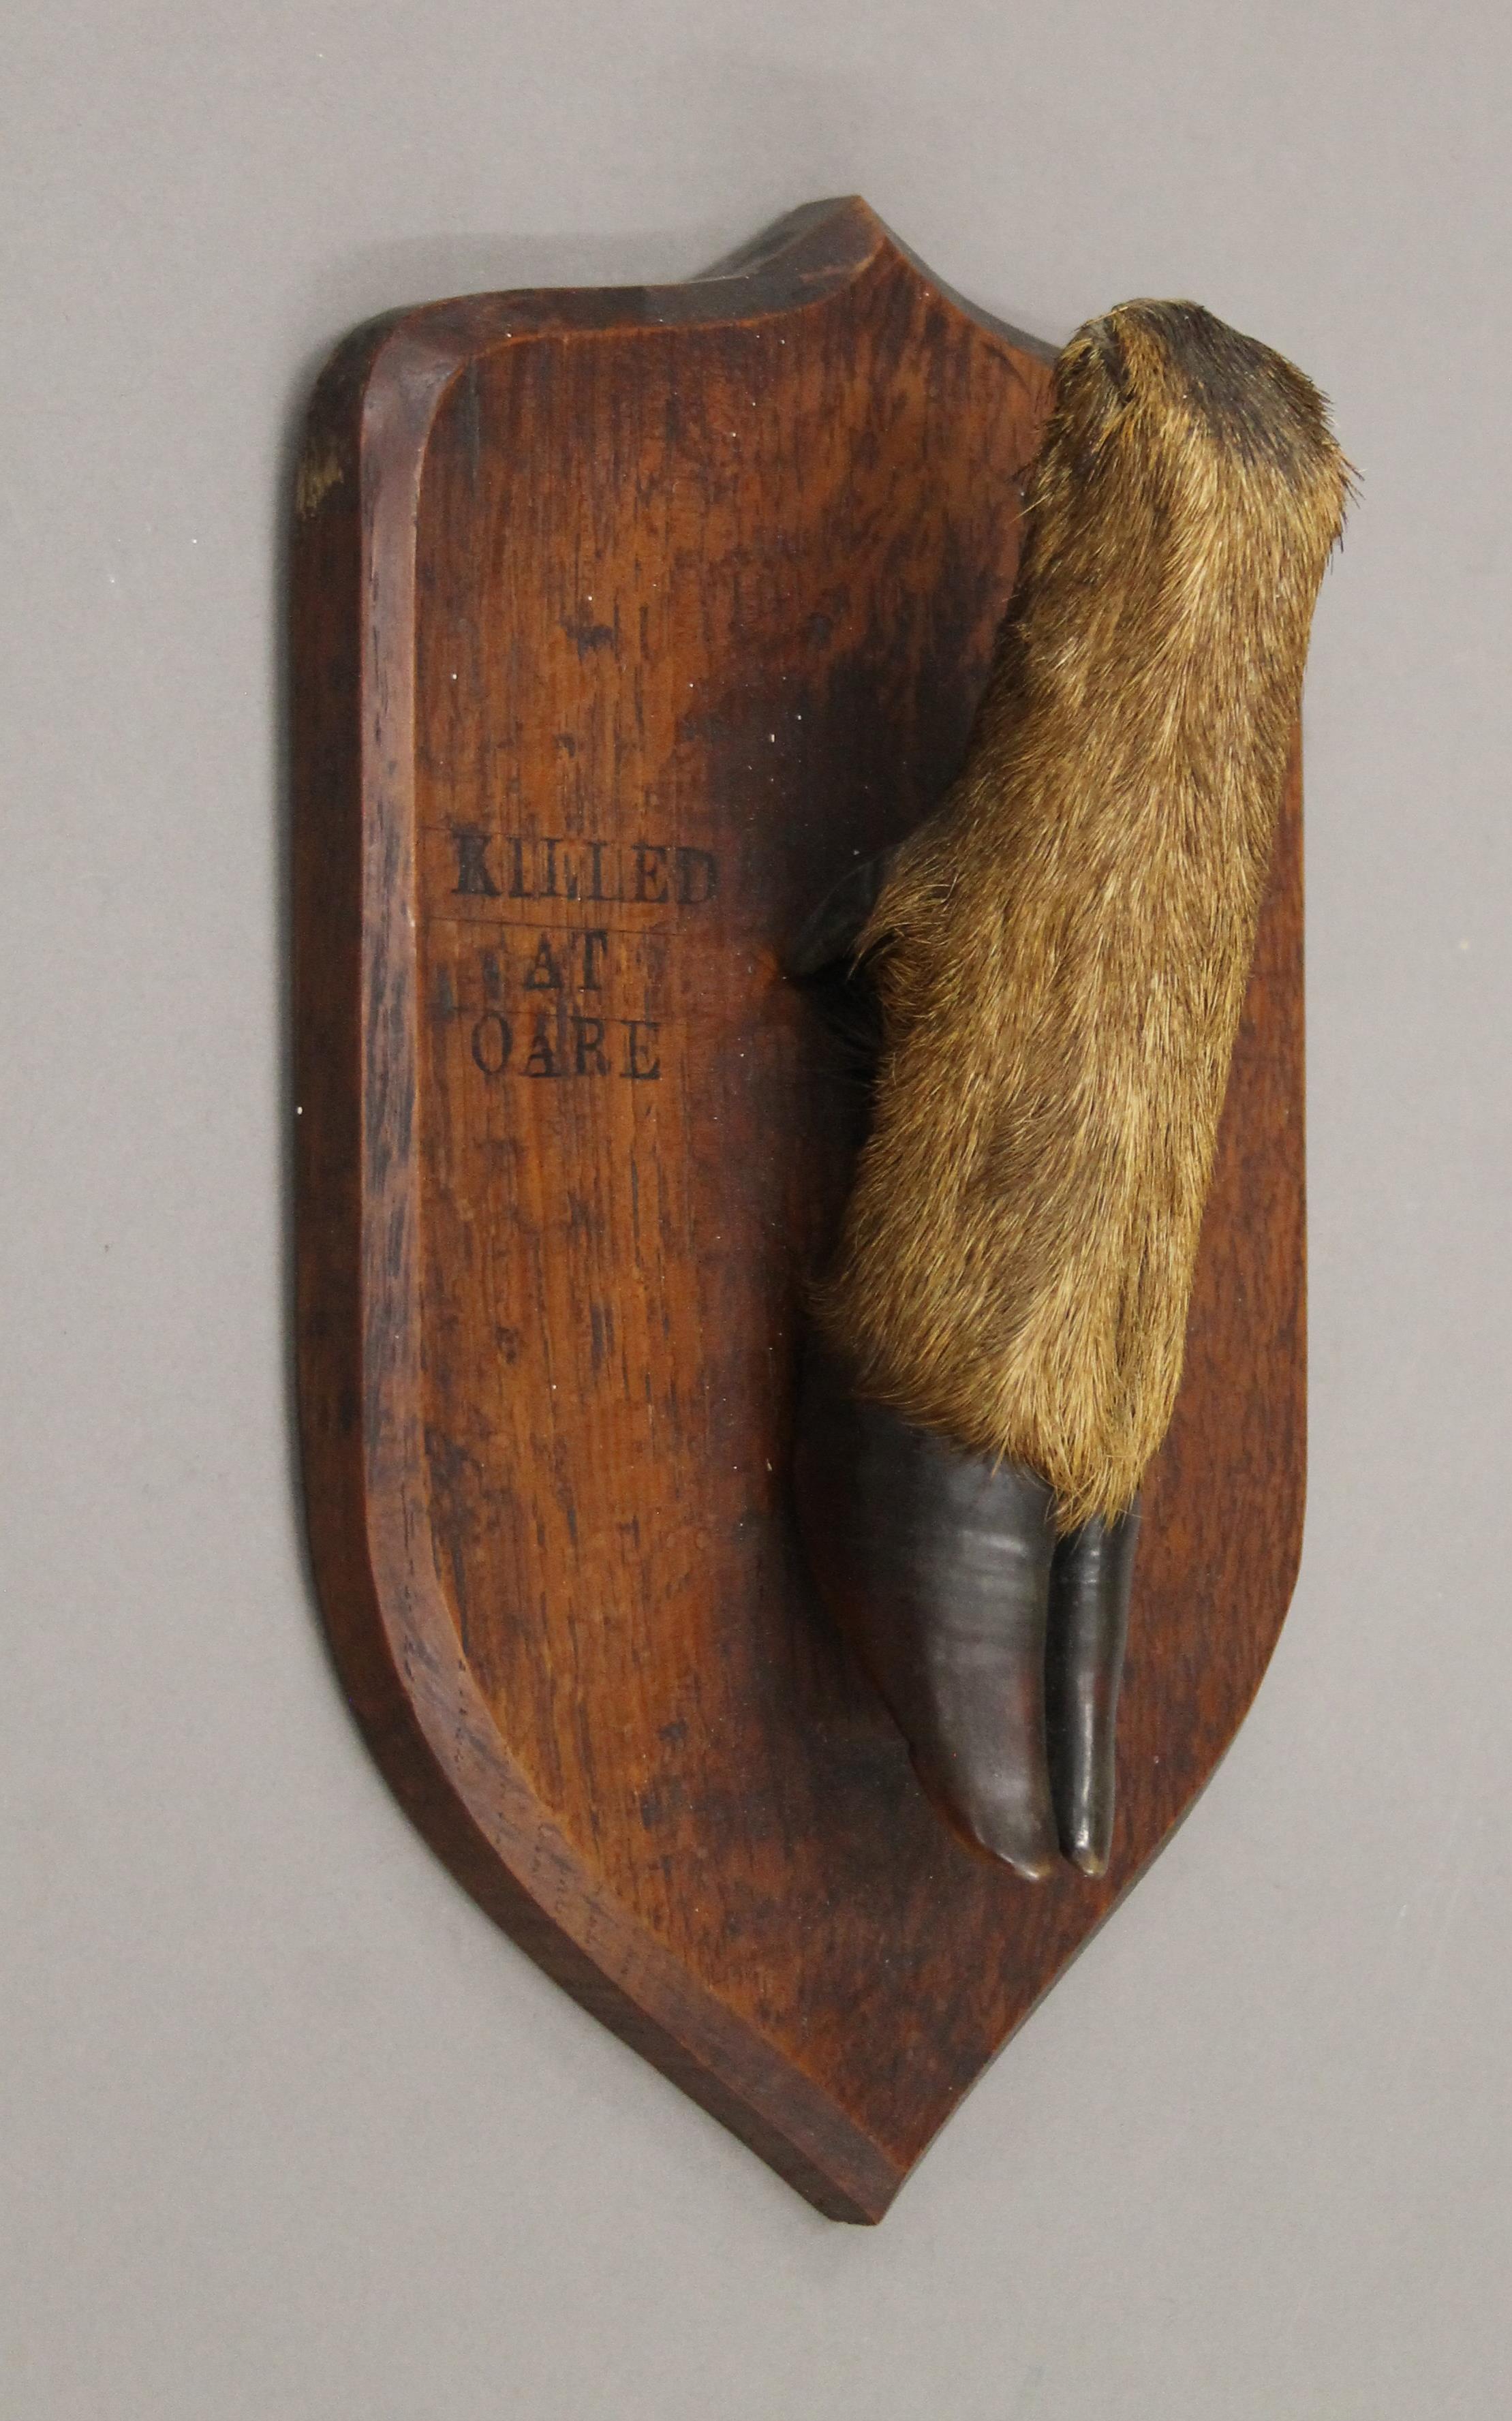 A taxidermy specimen of a preserved Red Deer's slot Cervus elaphus mounted on a wooden shield